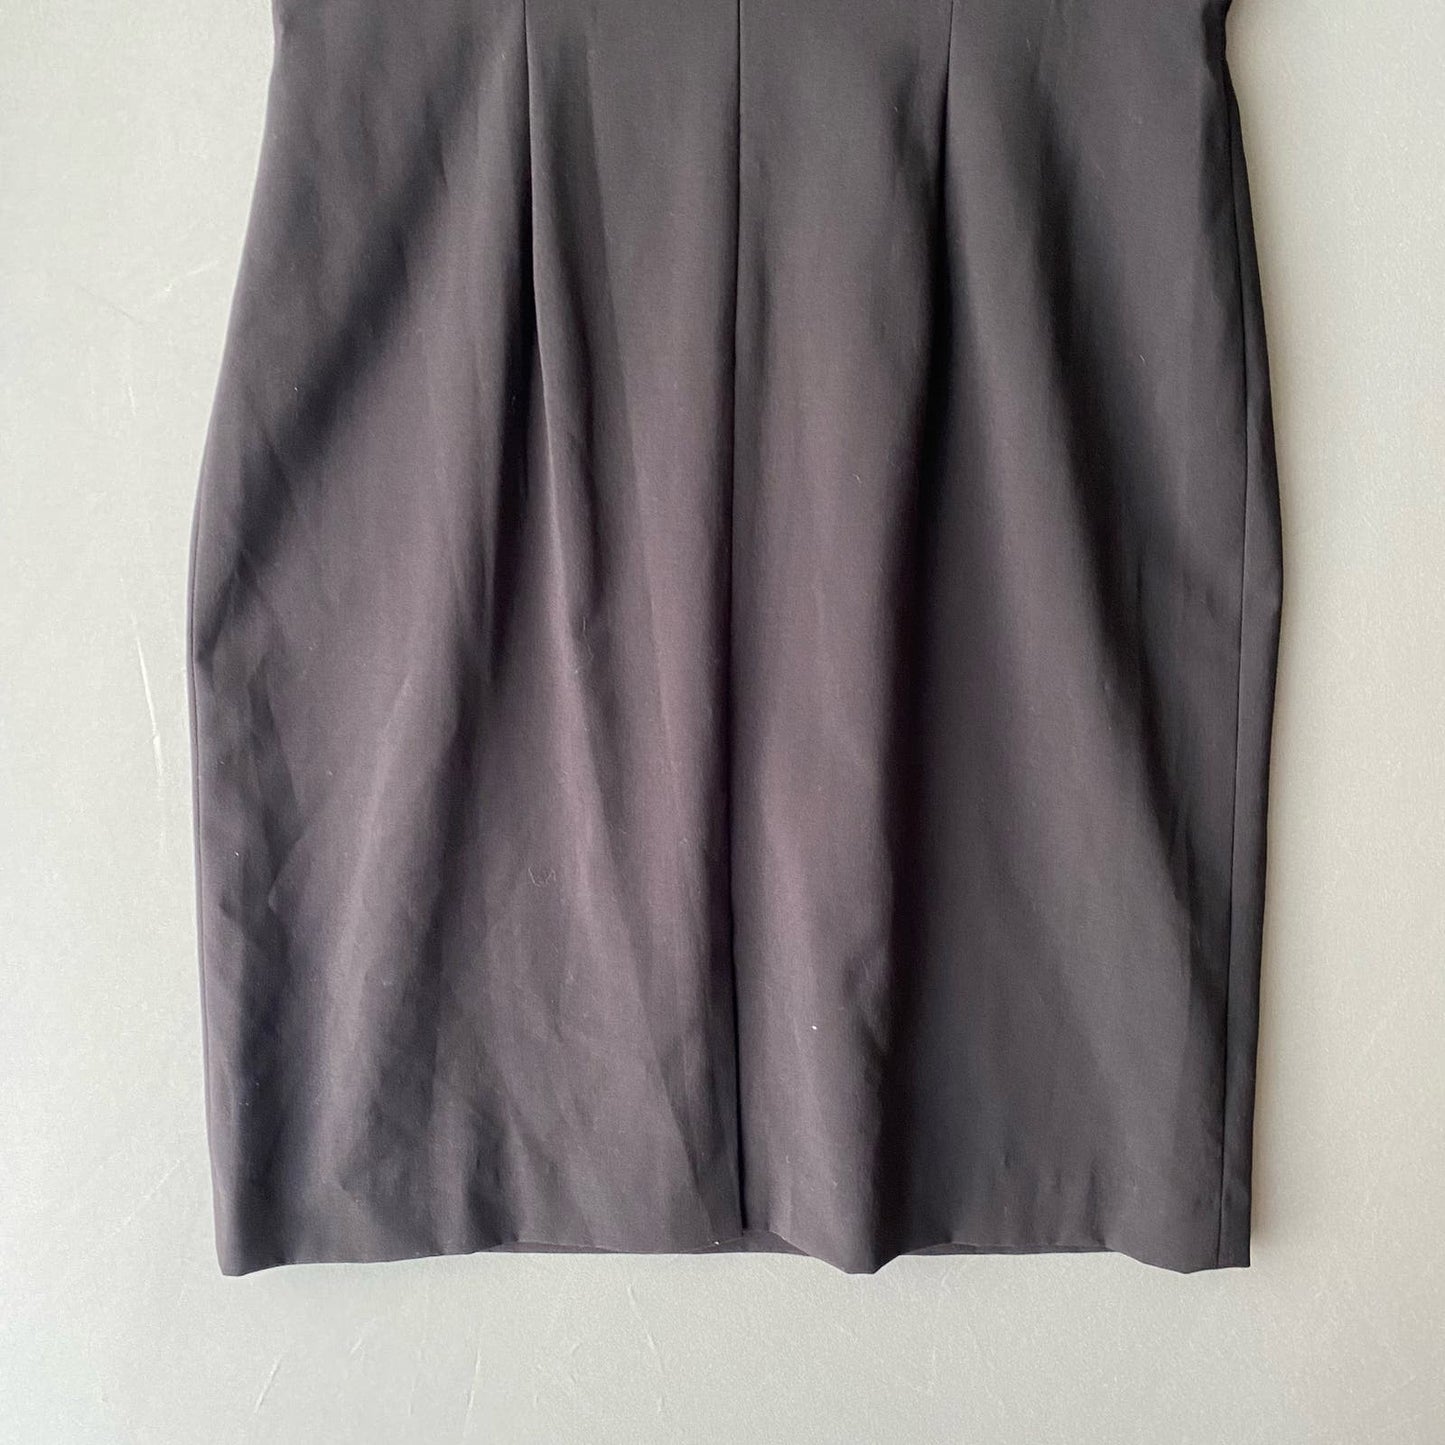 Tahari sz 8 mod sheath short sleeve dress